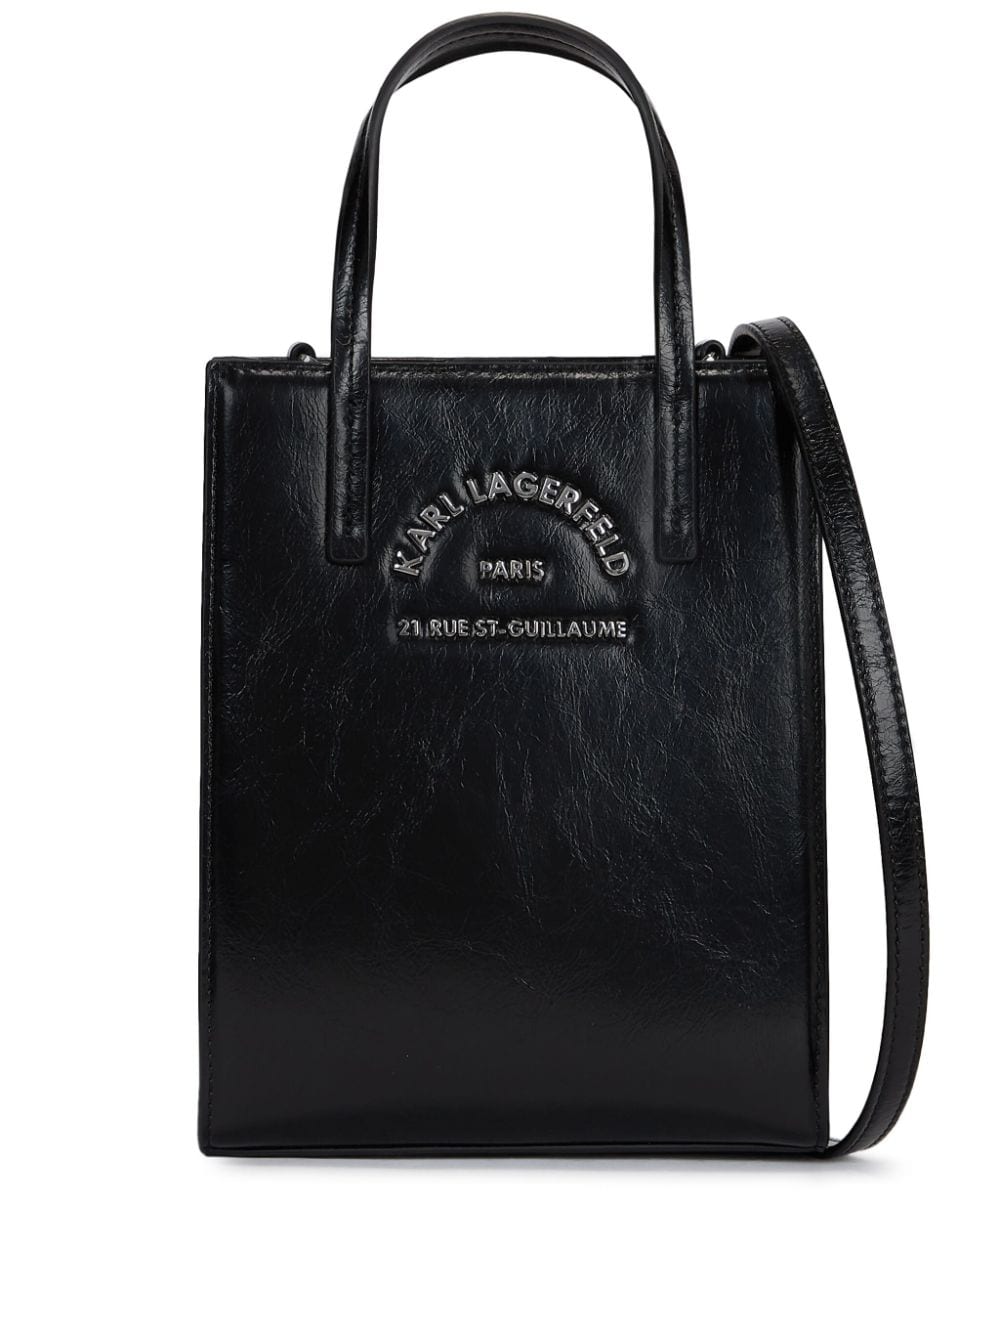 Karl Lagerfeld Rue St-guillaume Tote Bag In Black